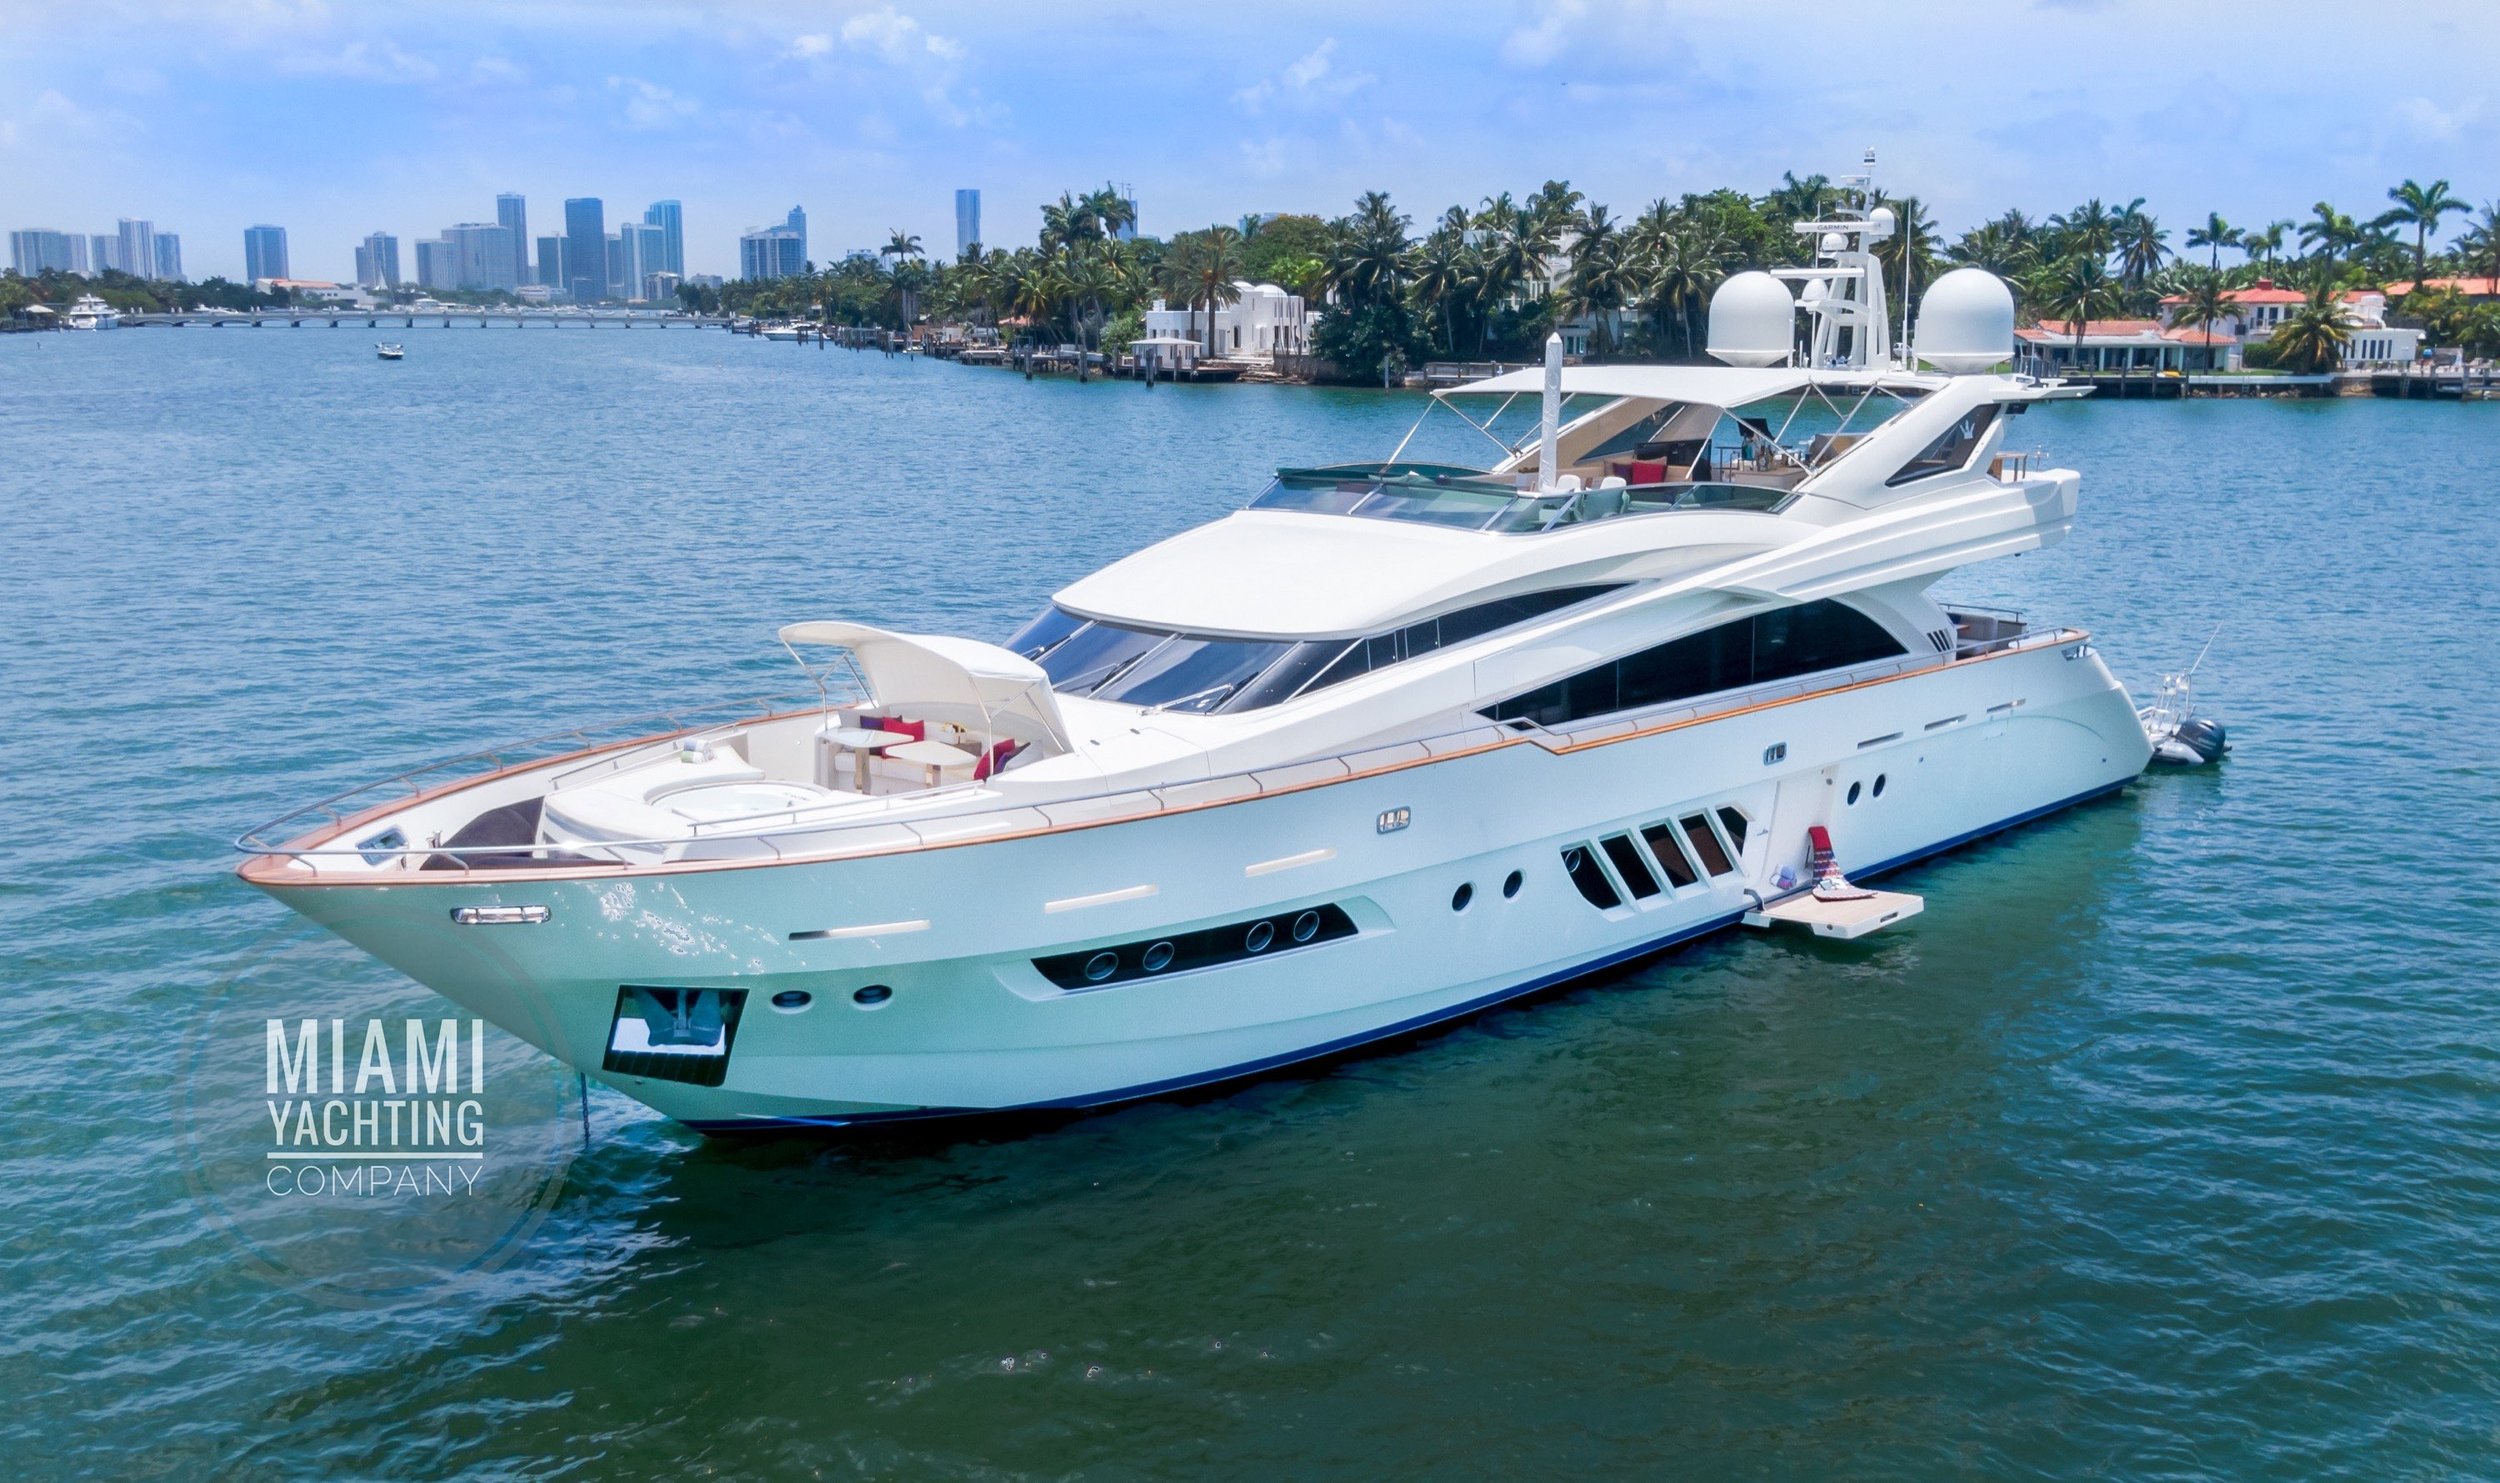 Miami_Yachting_Company_100_Dominator10.jpg